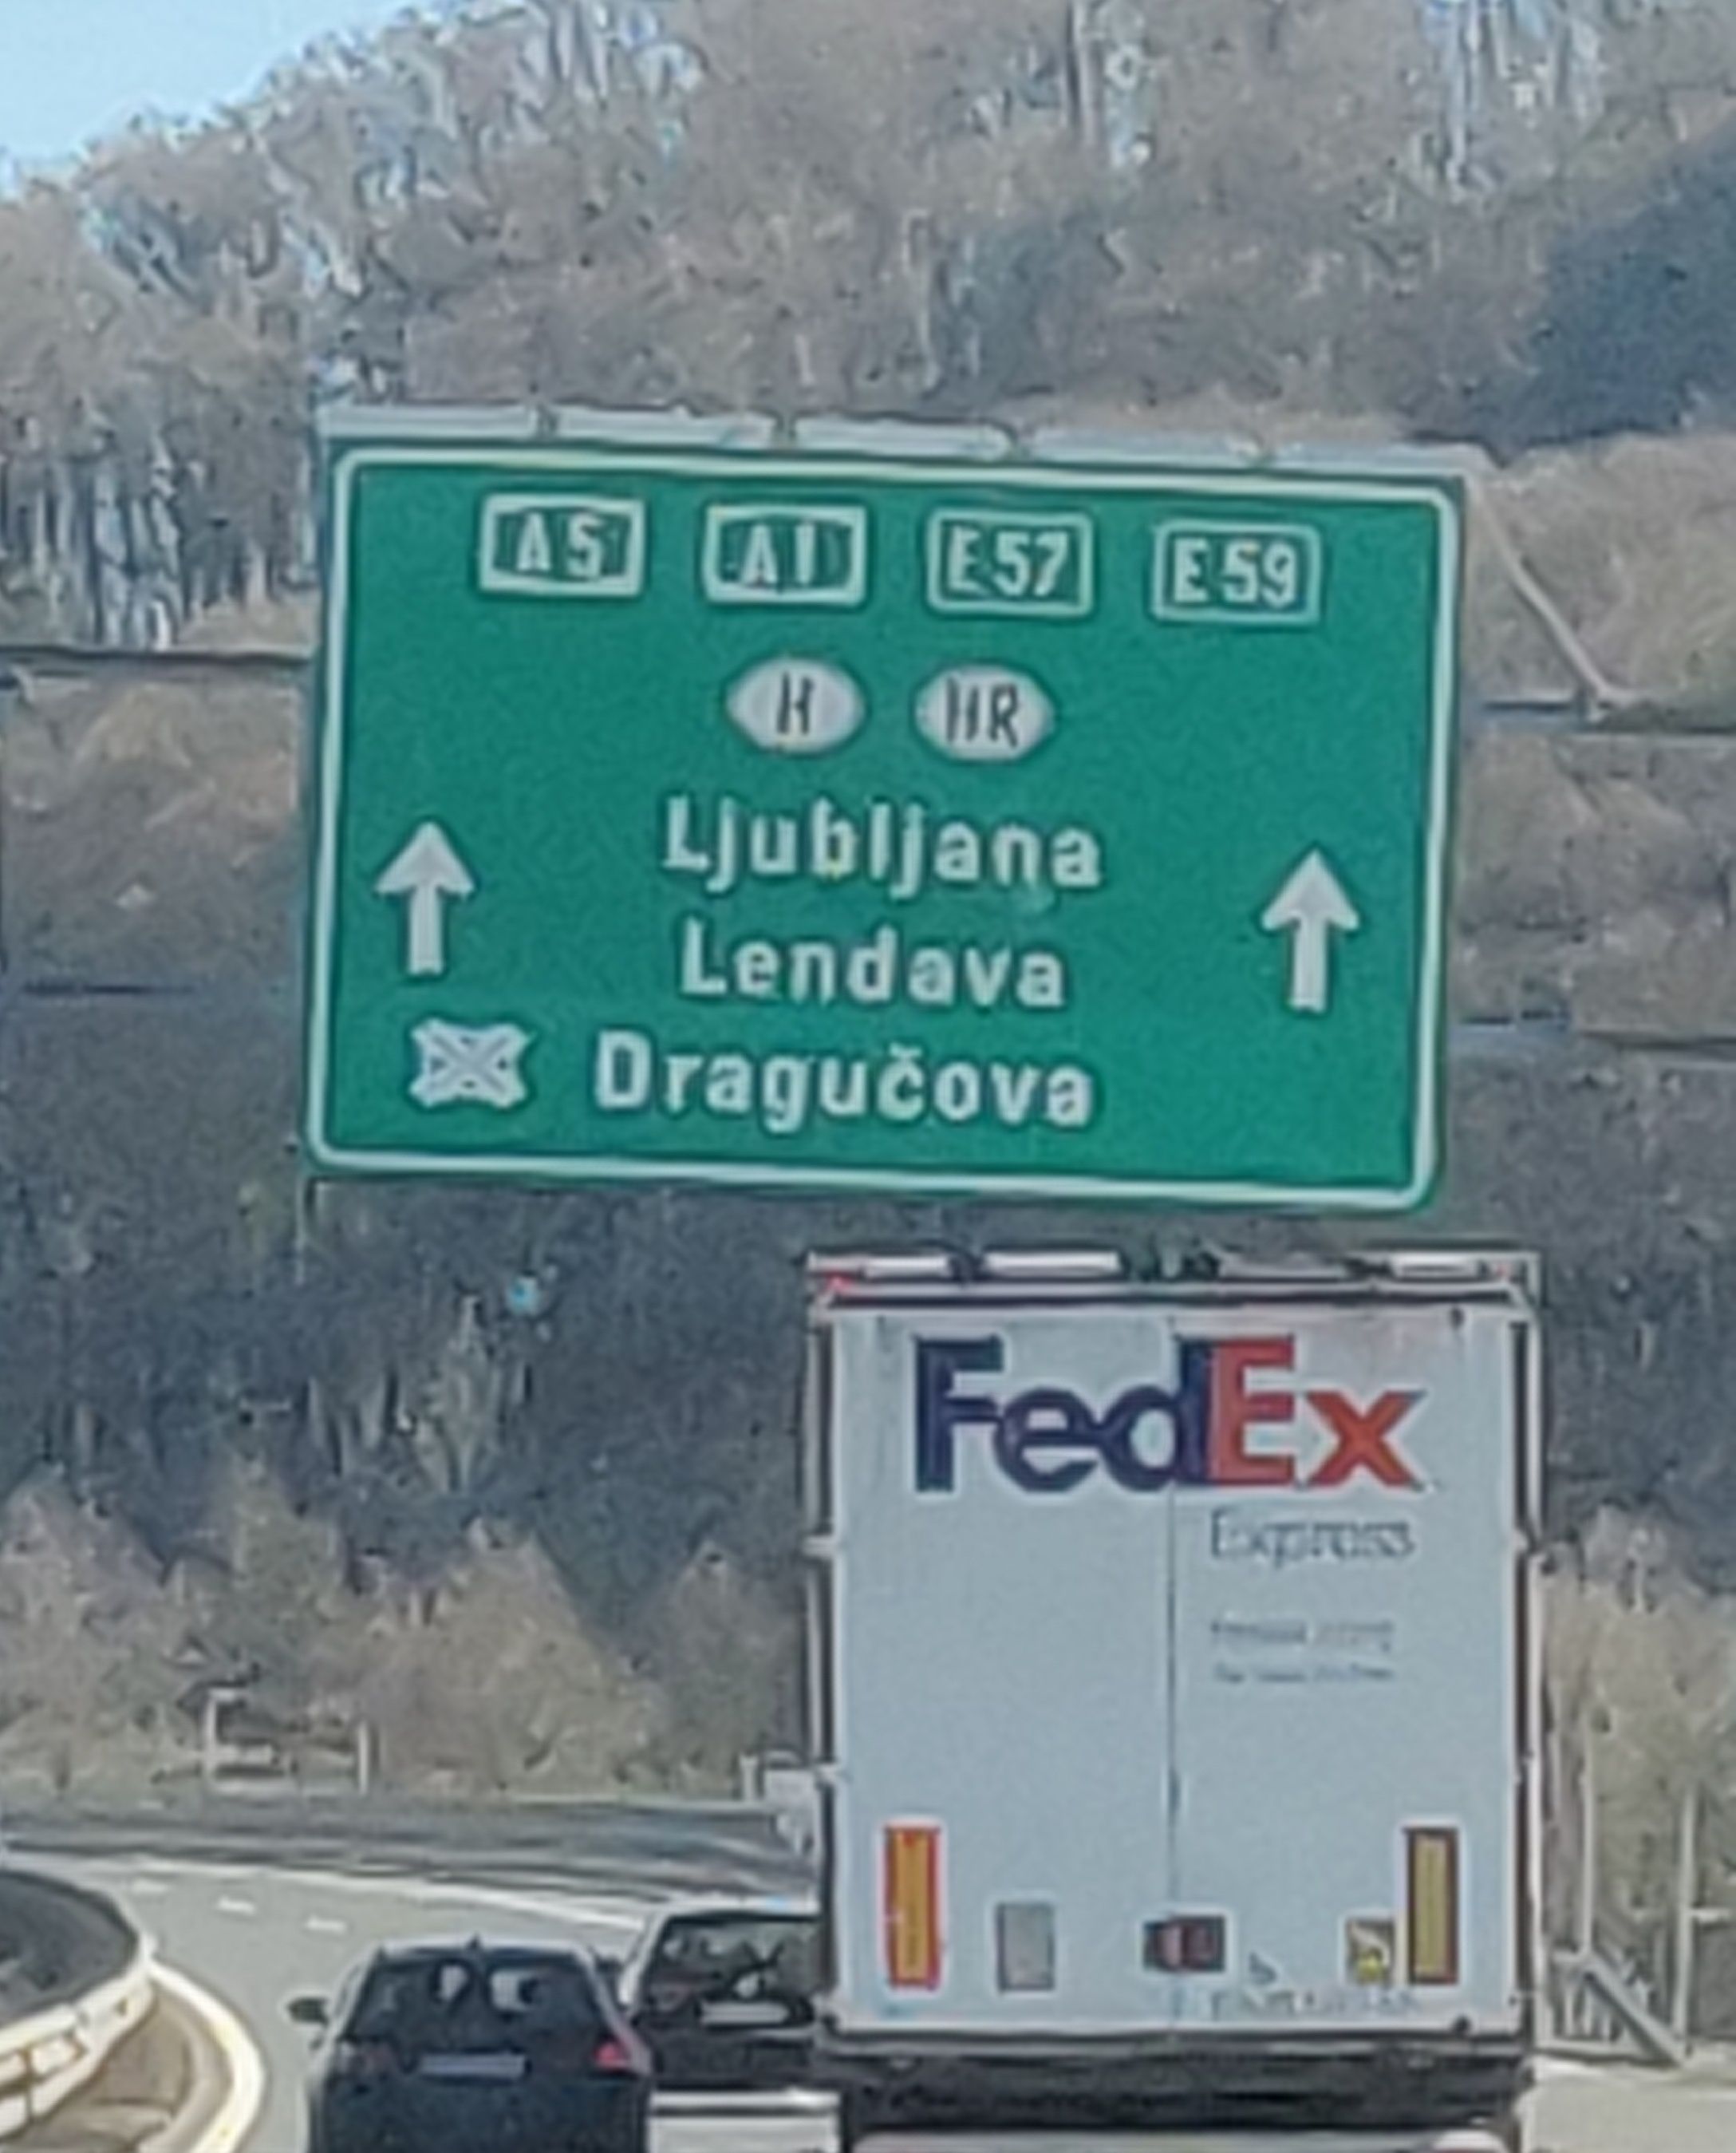 I know you guys are missing the Ljubljana posting. DW, I got you!